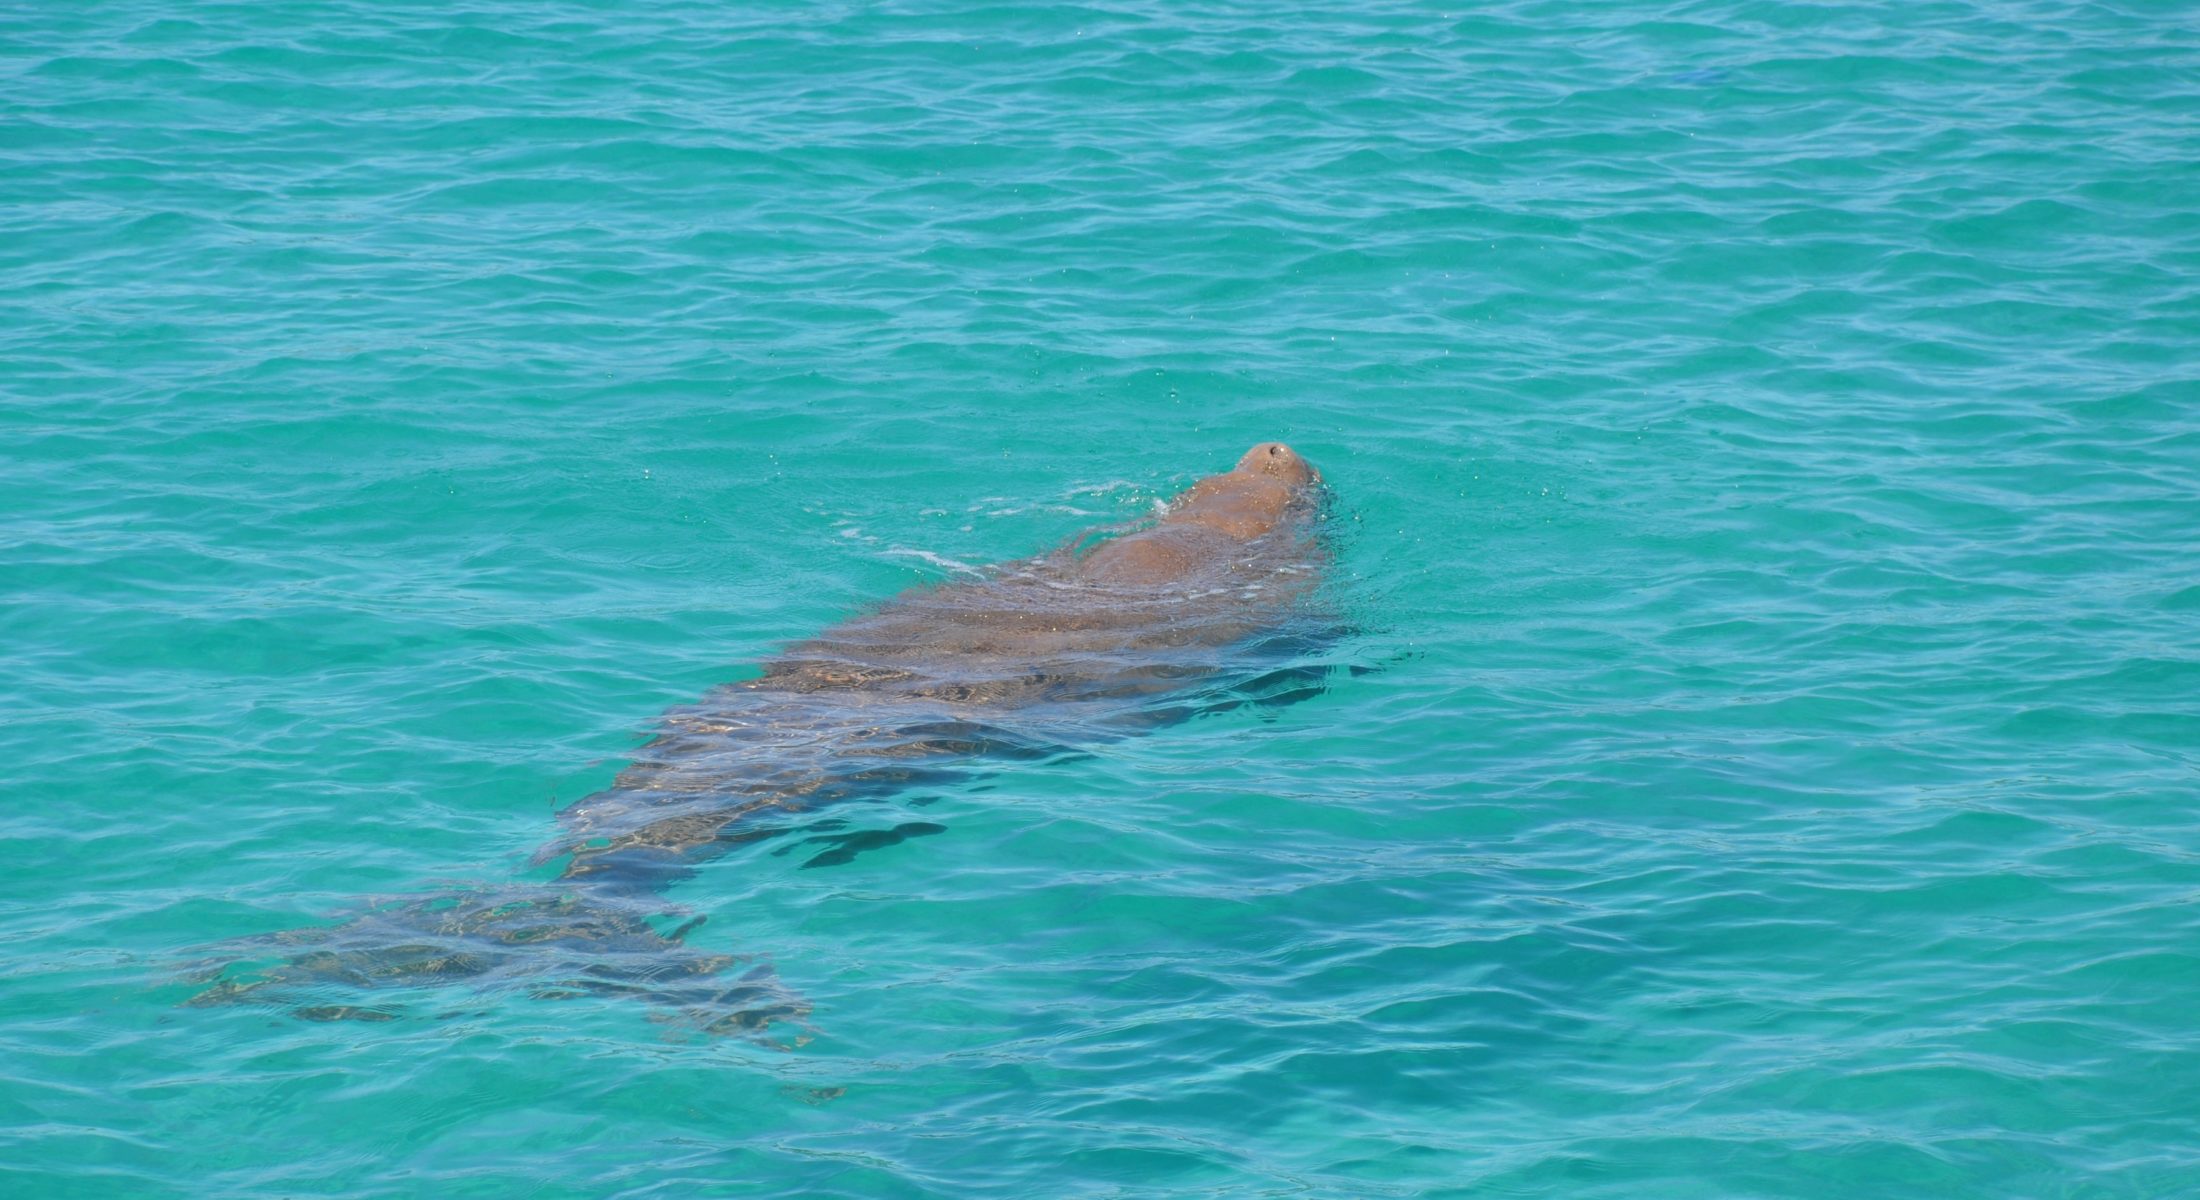 Dolphin Wild Tour Operator Redcliffe Visit Moreton Bay Region Dugong